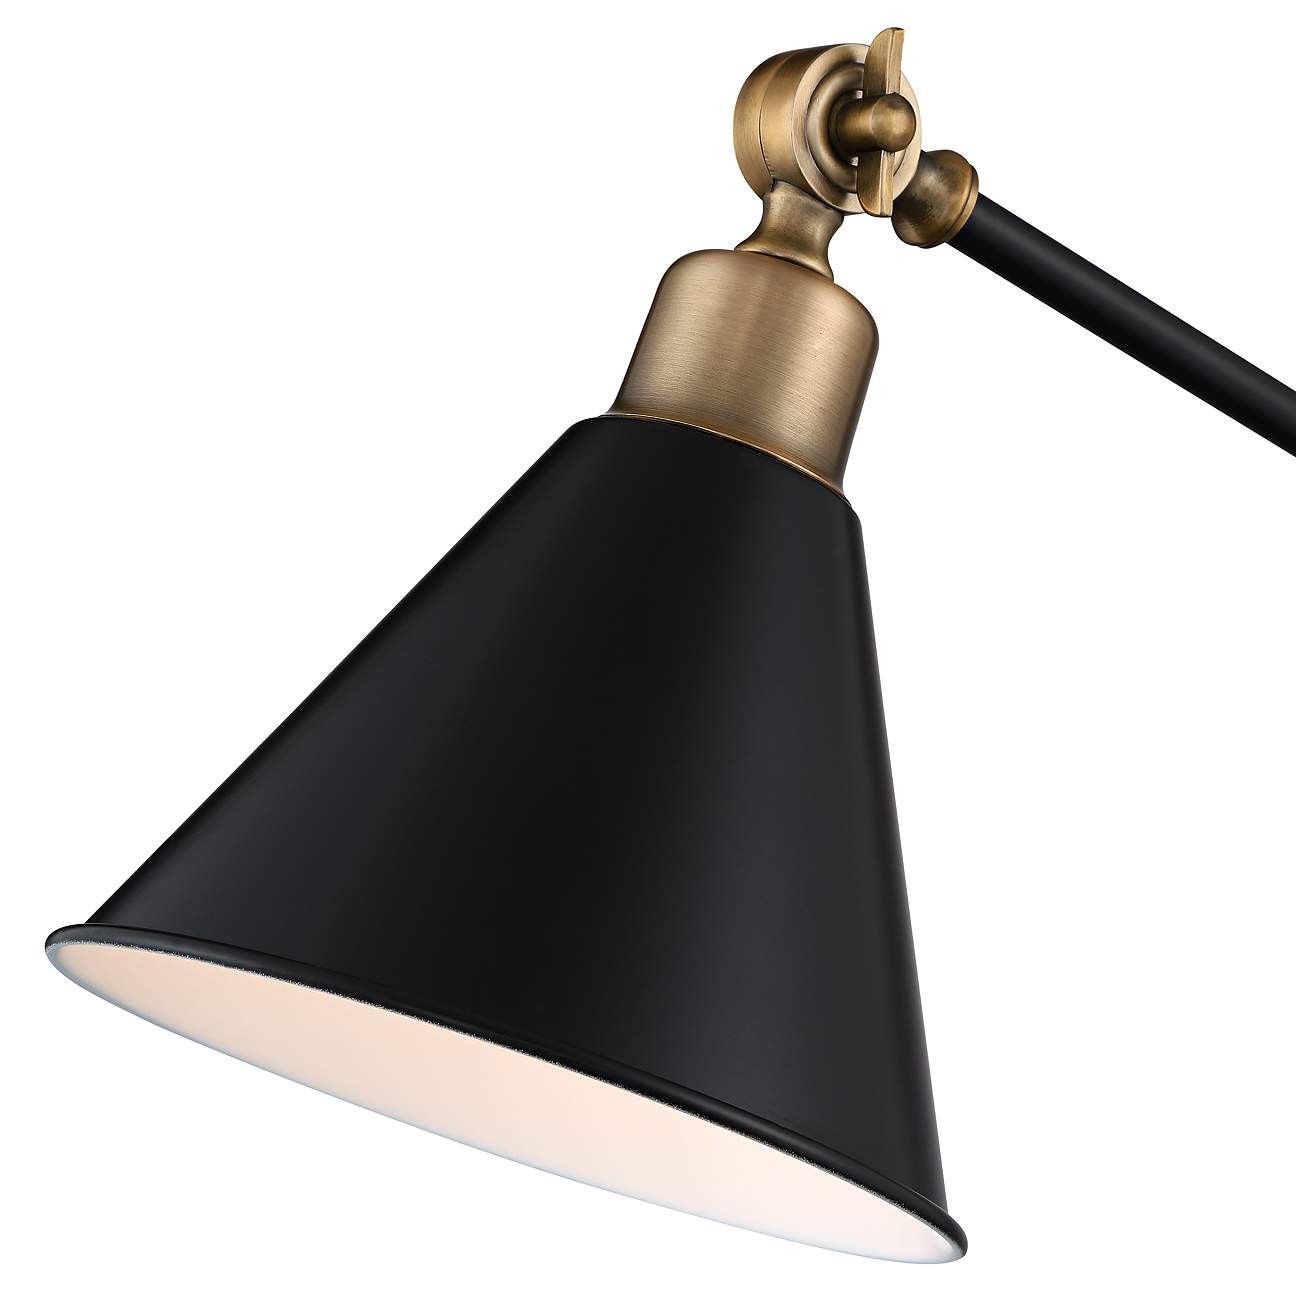 Wray Black Antique Brass Adjustable Desk Lamp with USB Port | www.lampsplus.com | Lamps Plus